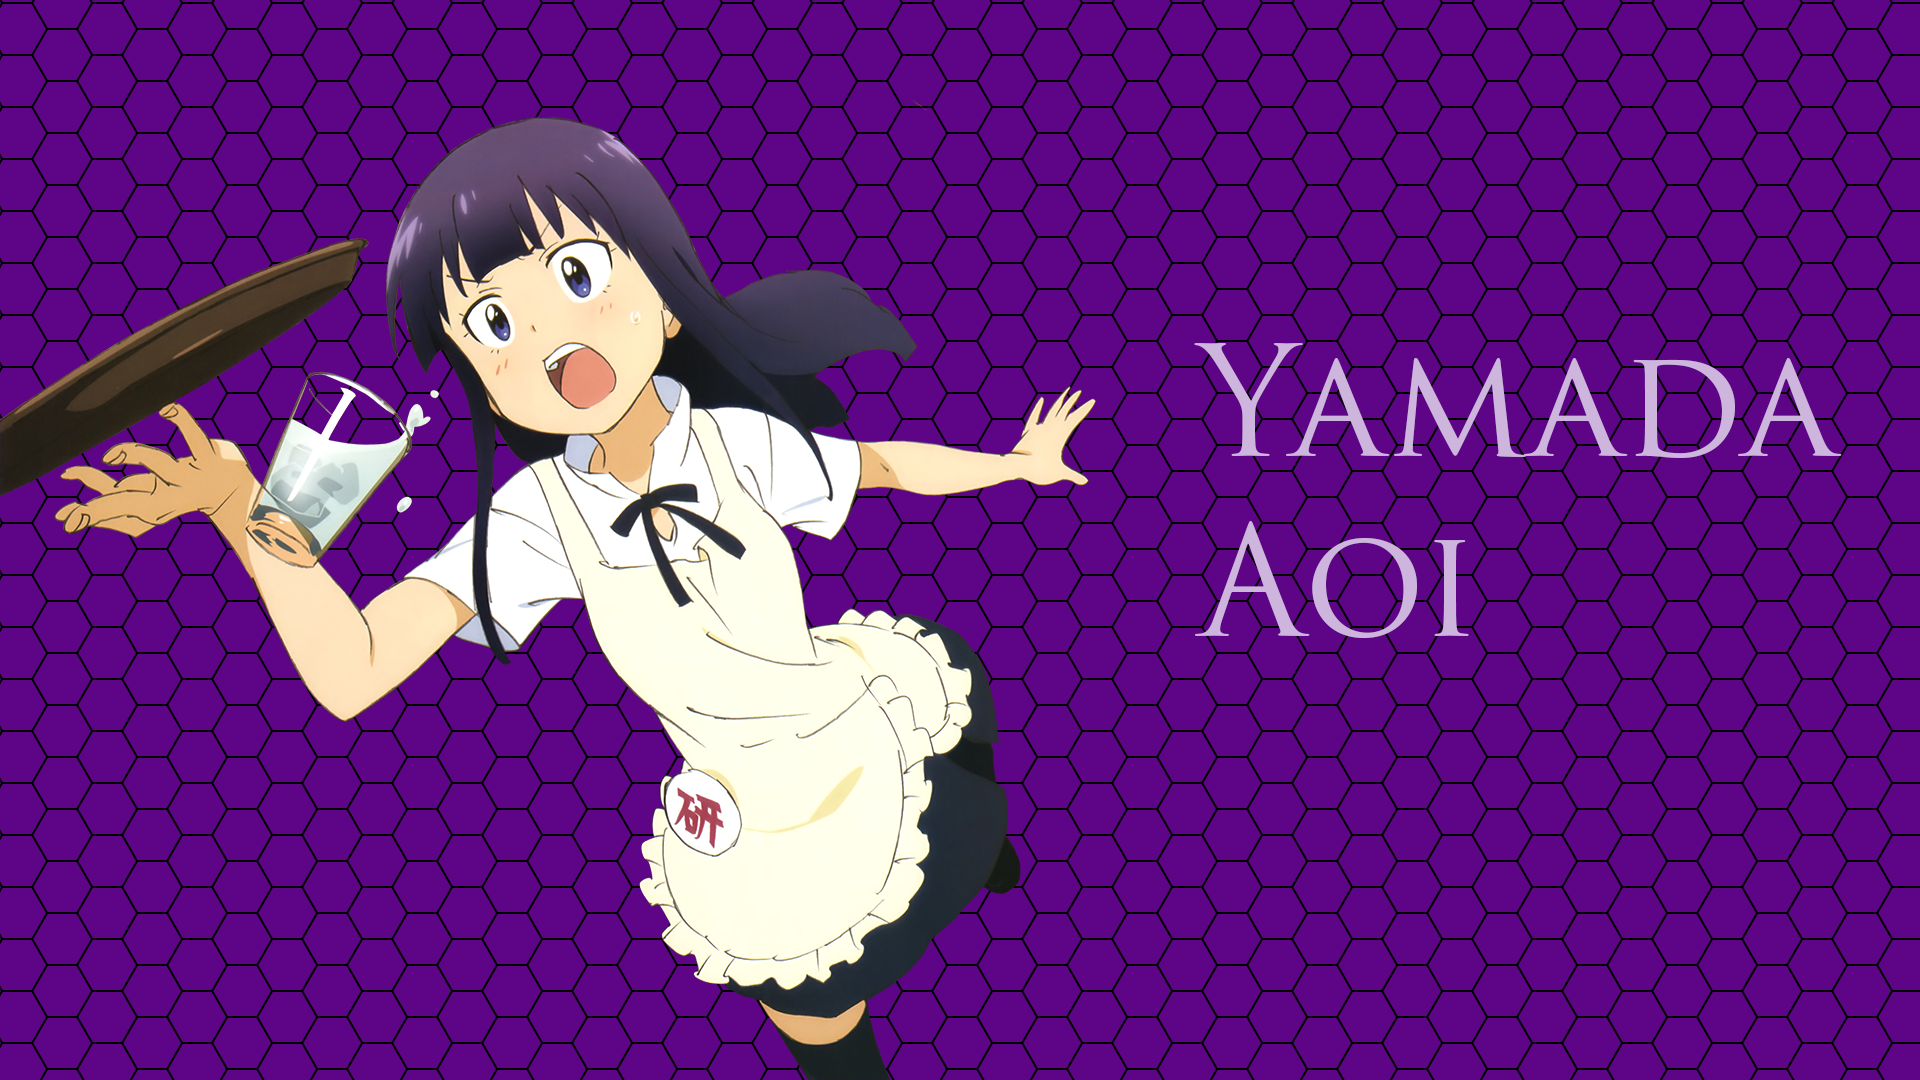 Anime 1920x1080 Yamada Aoi Working!! uniform anime anime girls women purple background drinking glass